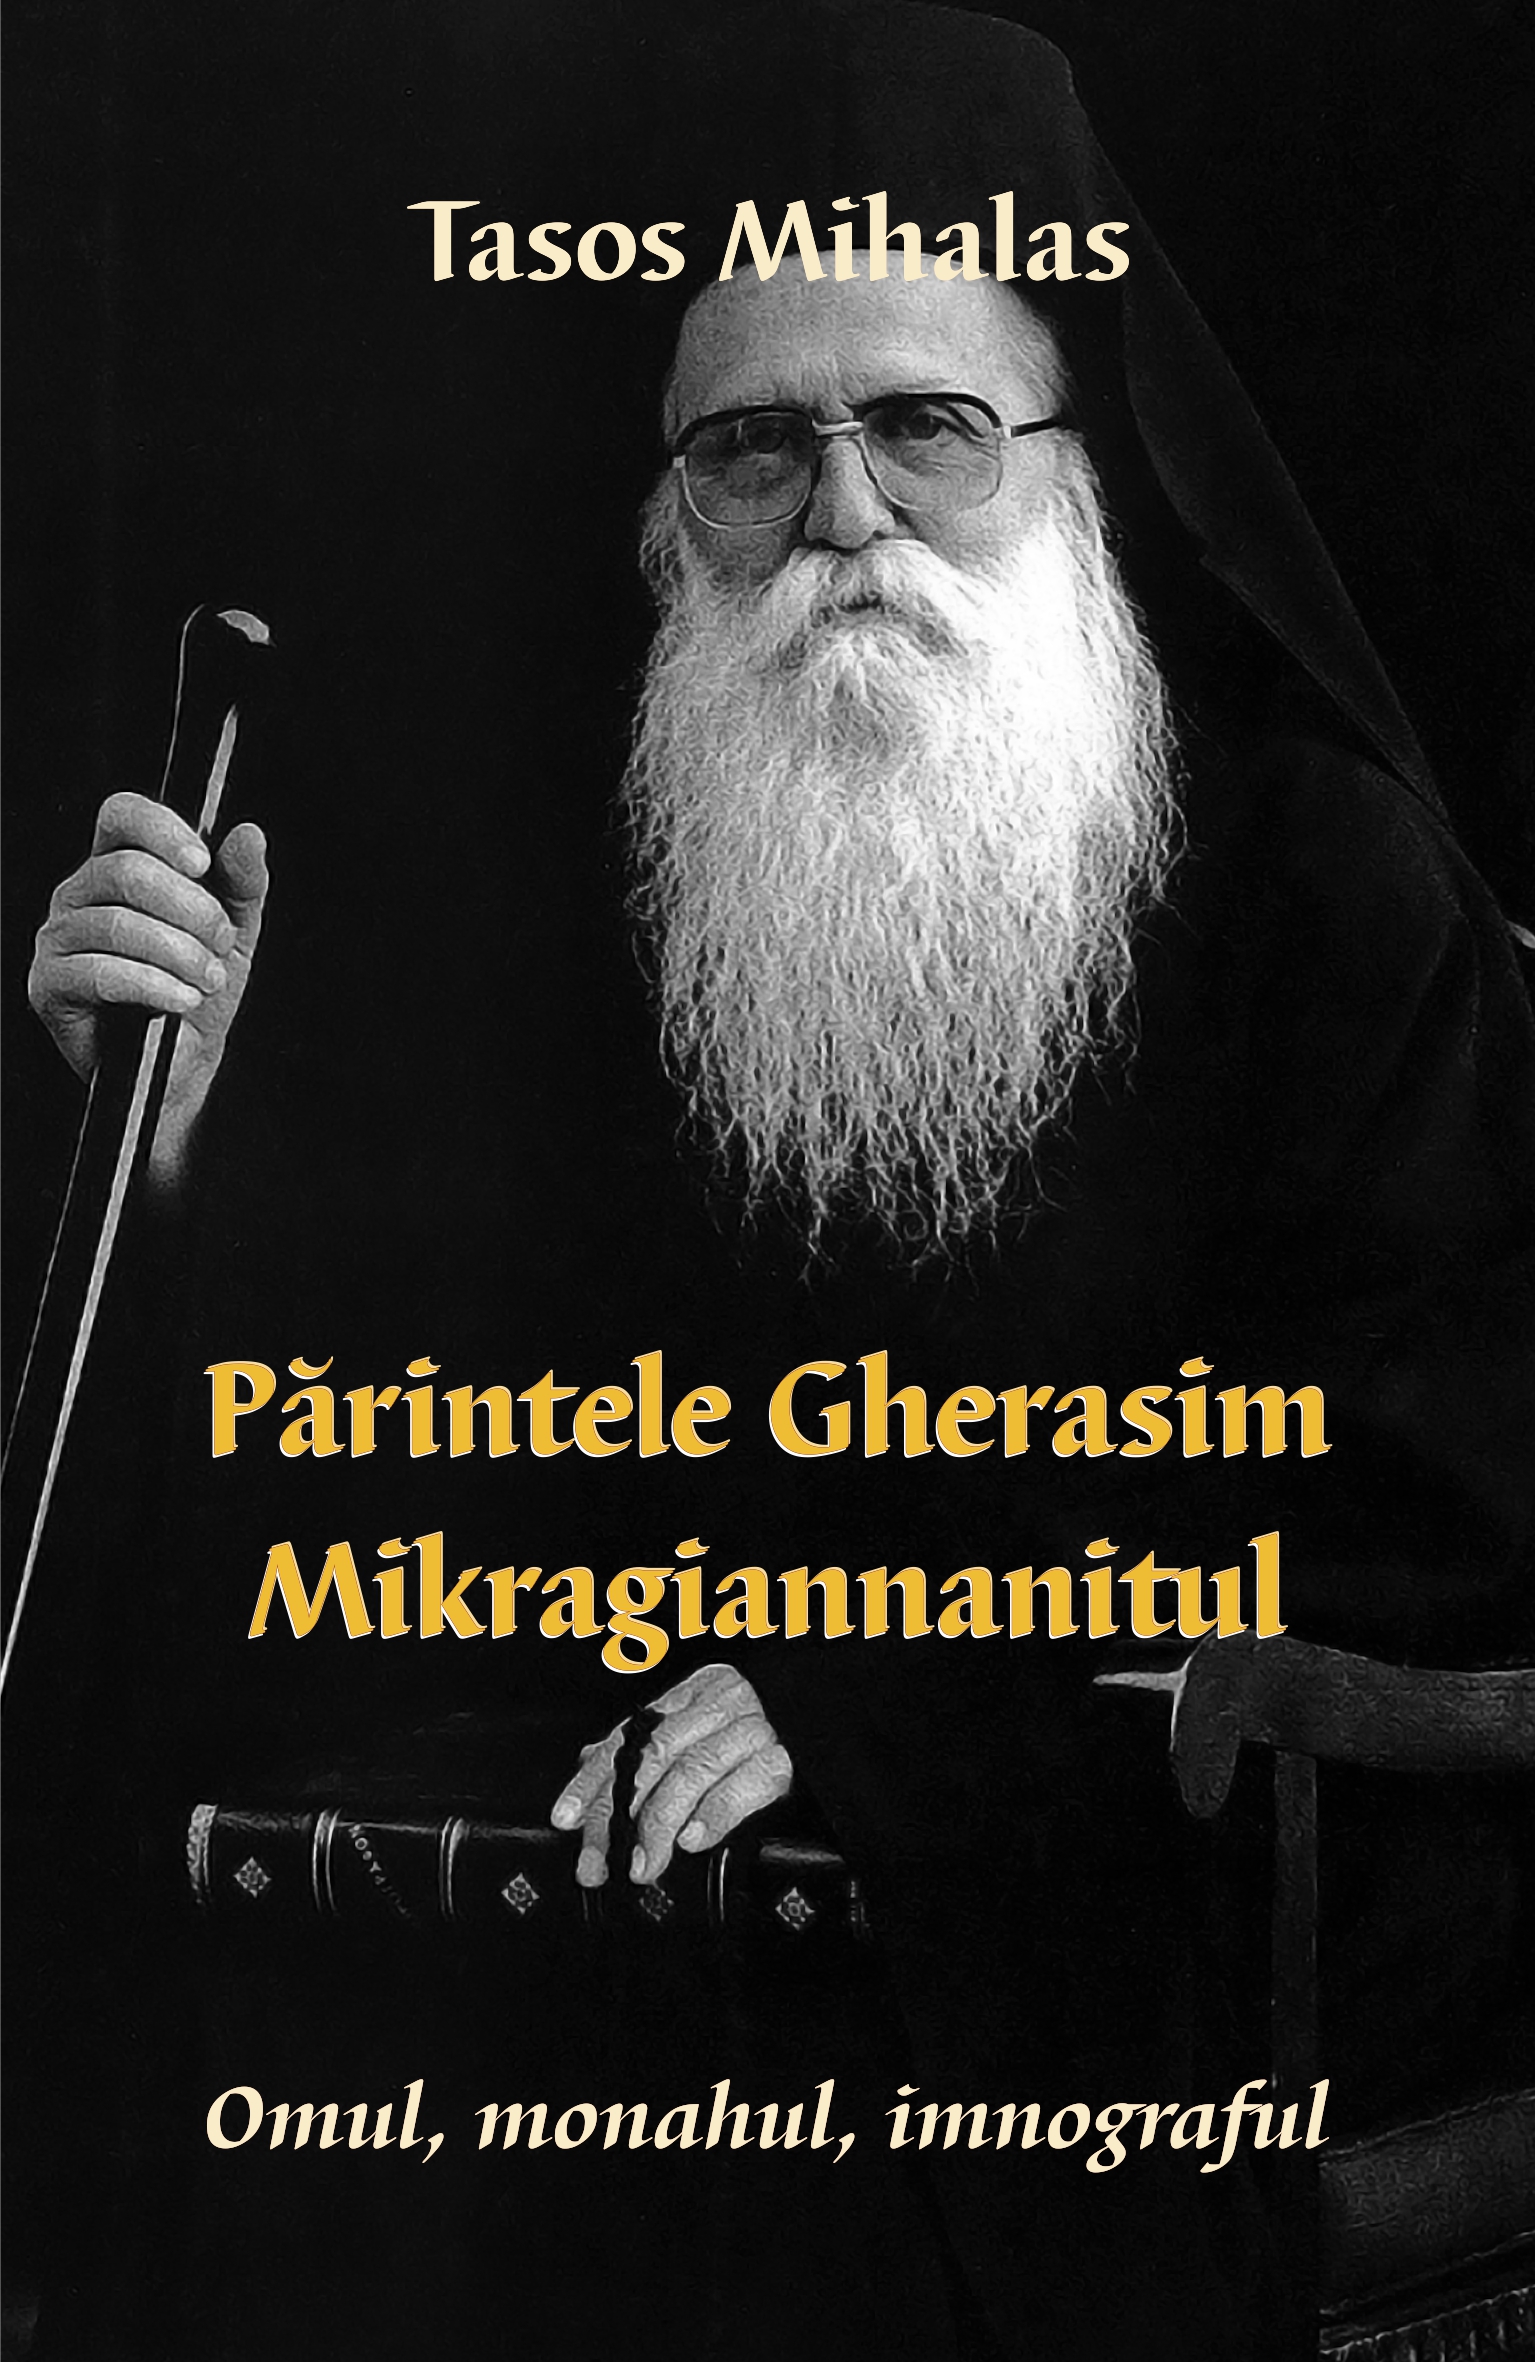 Parintele Gherasim Mikragiannanitul: Omul, monahul, imnograful - Tasos Mihalas